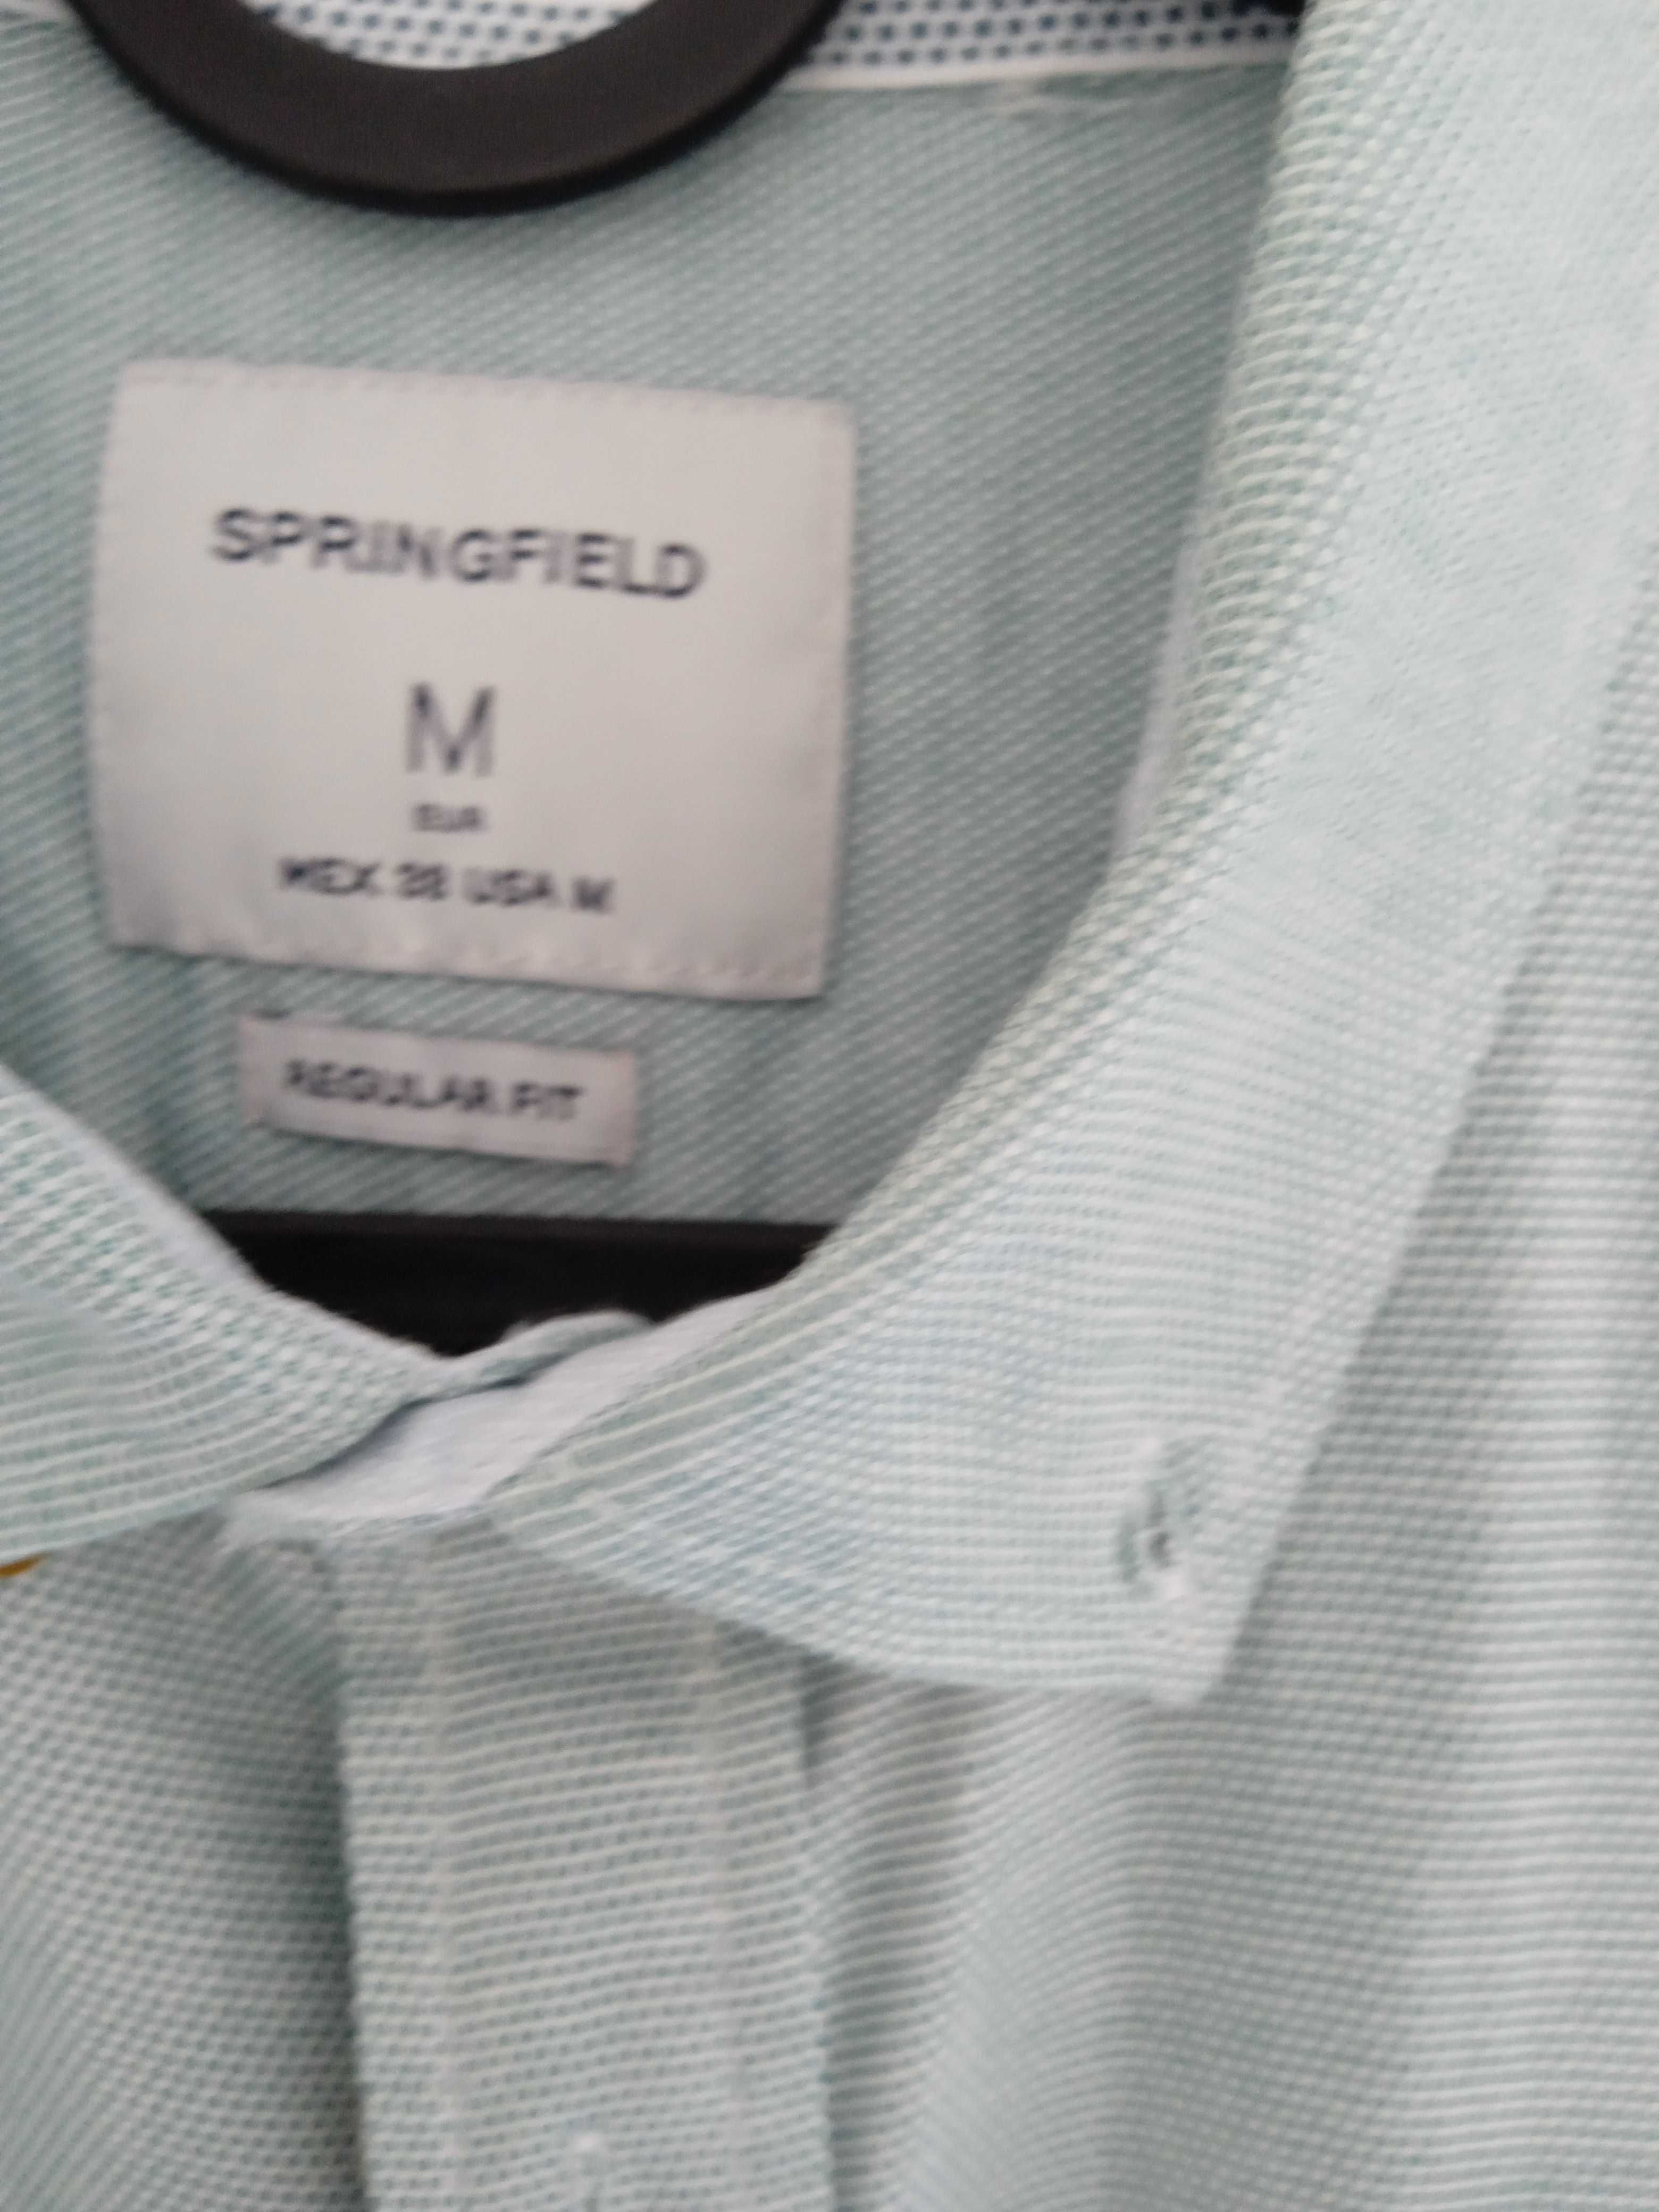 Camisa Springfield regular fit M